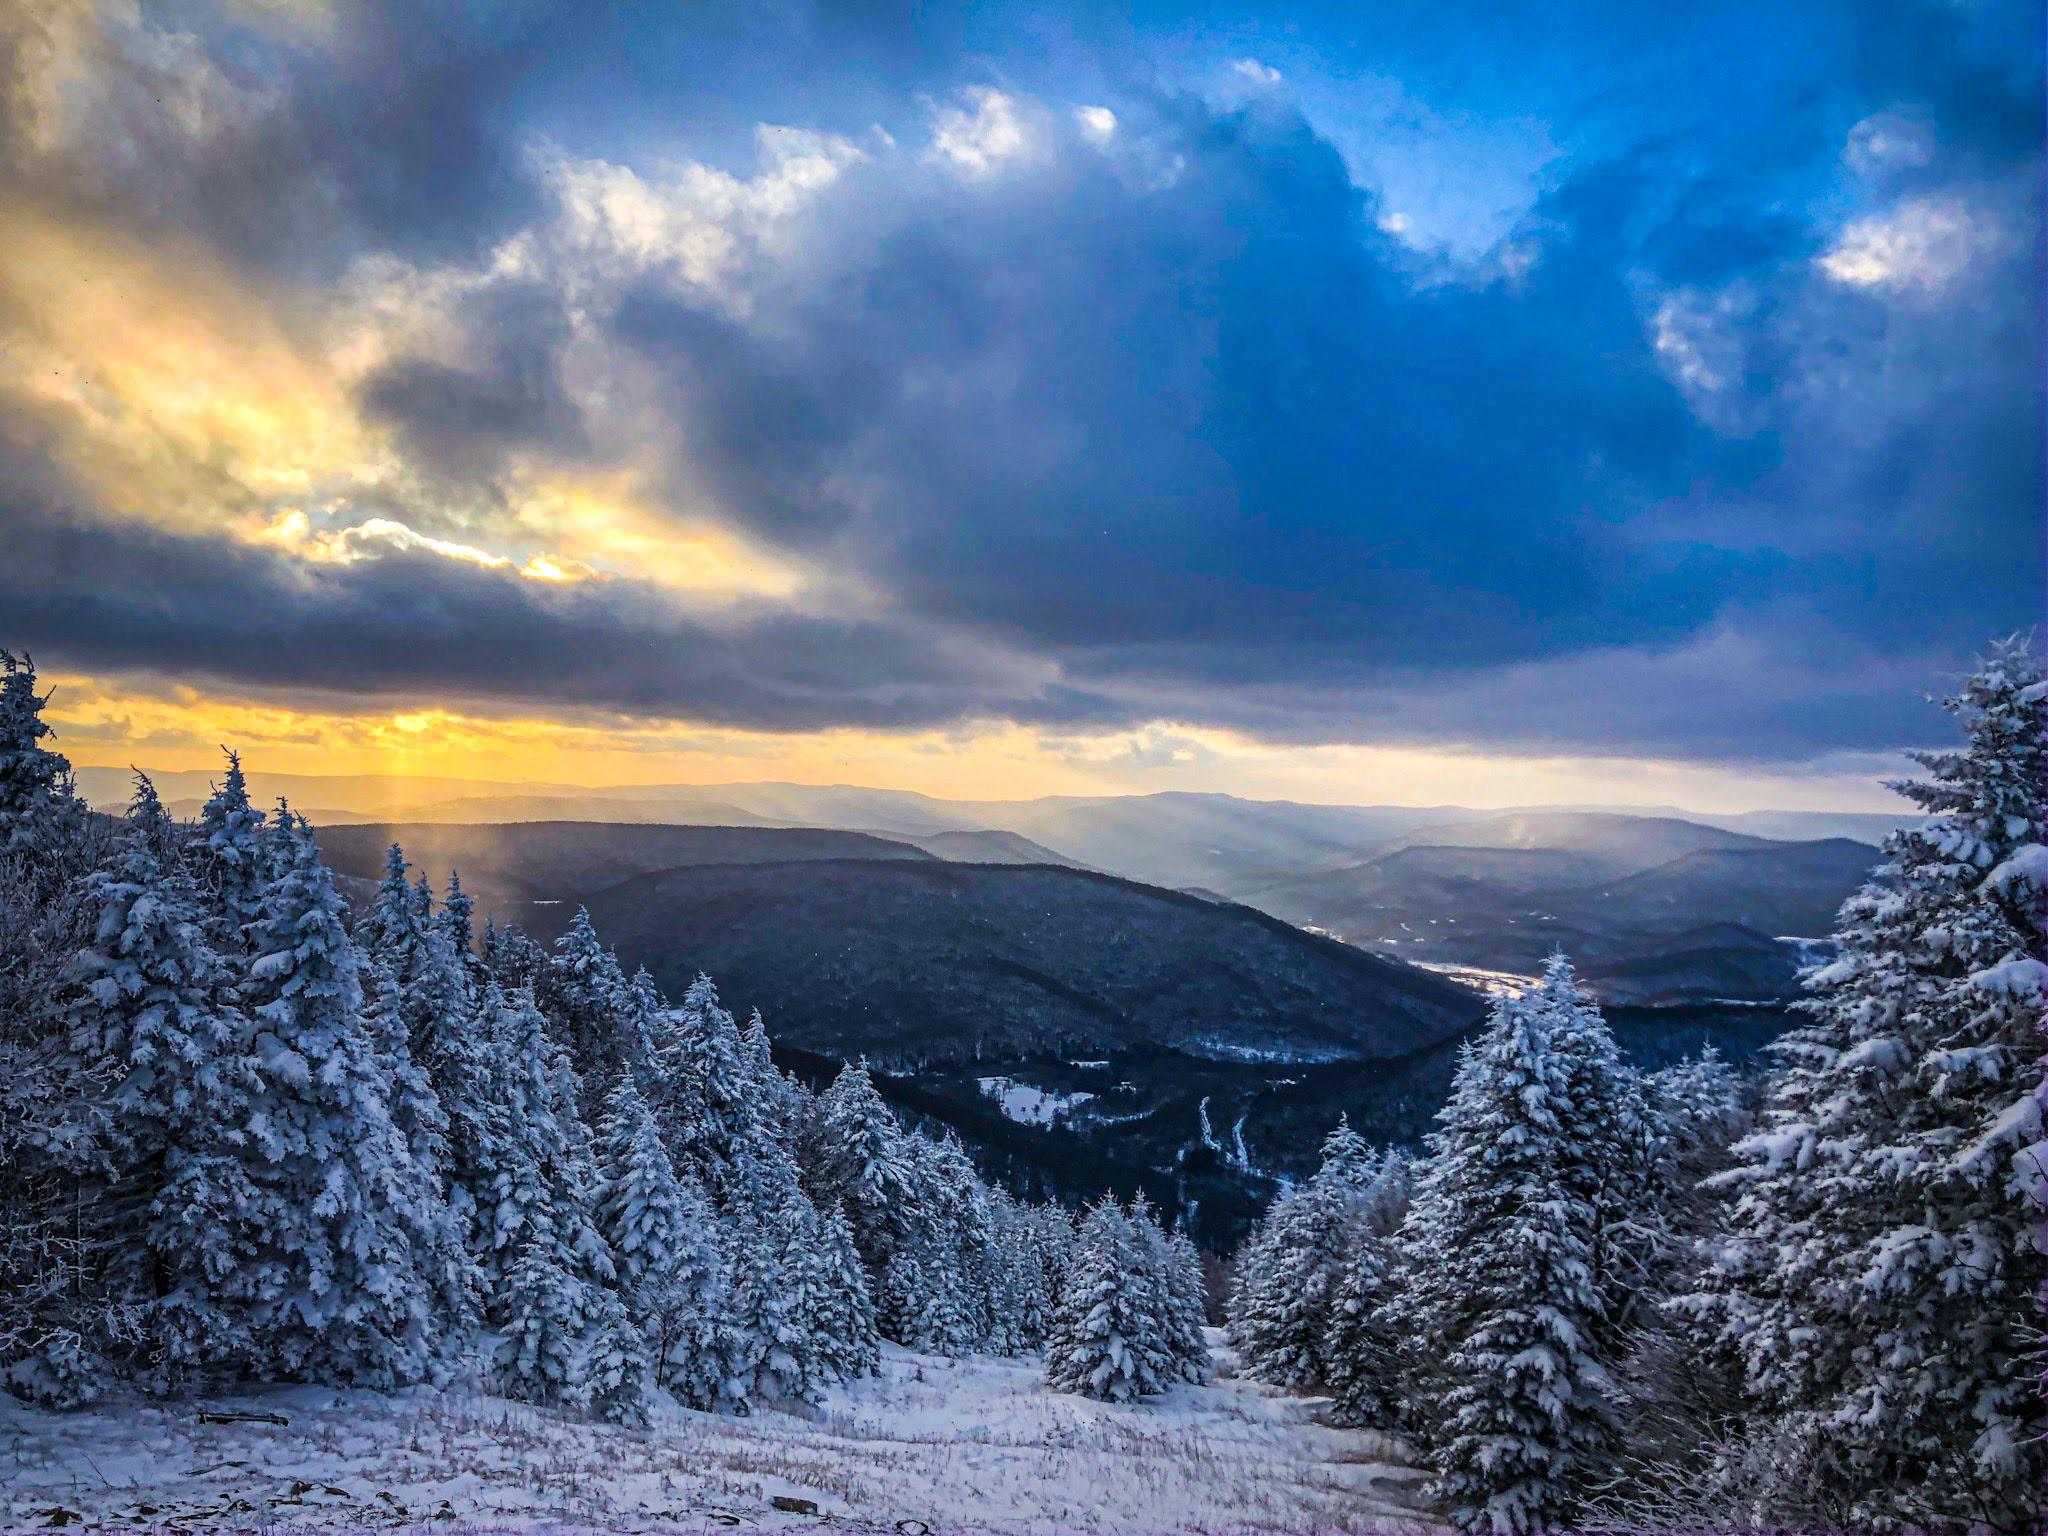 Snowshoe, West Virginia at sunset [2048x1536] [OC]